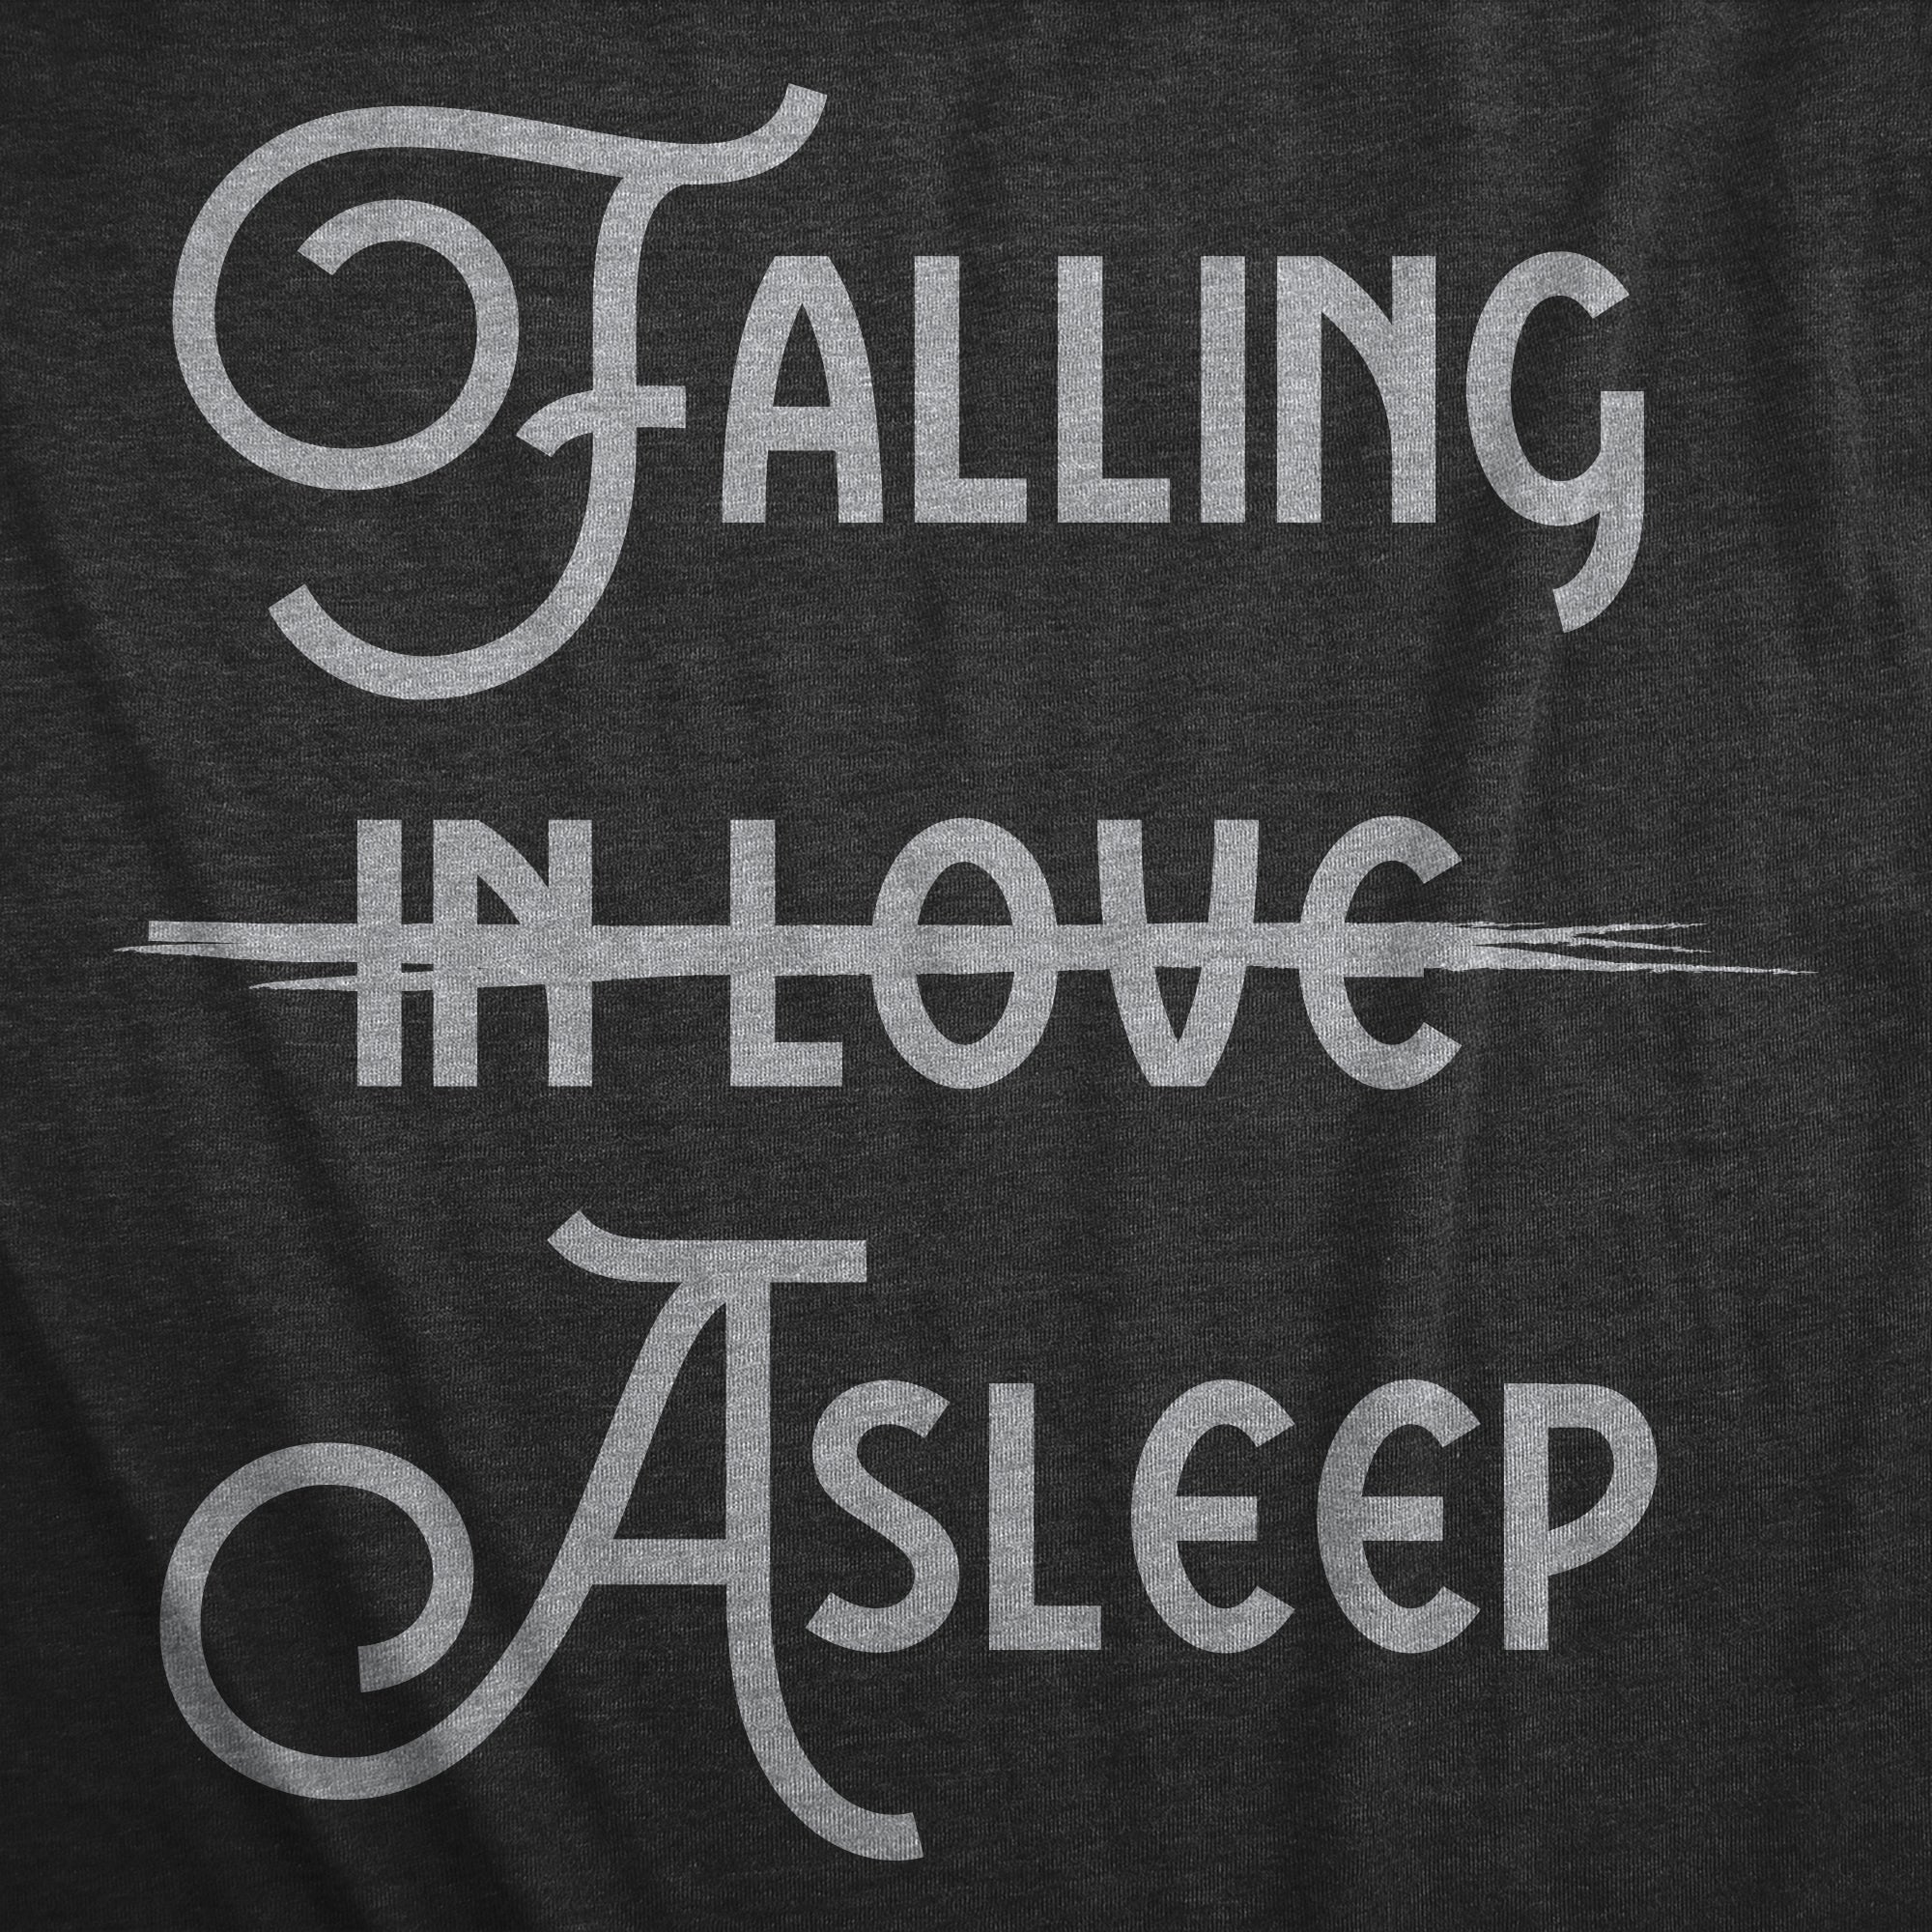 Funny Heather Black - ASLEEP Falling Asleep Womens T Shirt Nerdy Sarcastic Tee